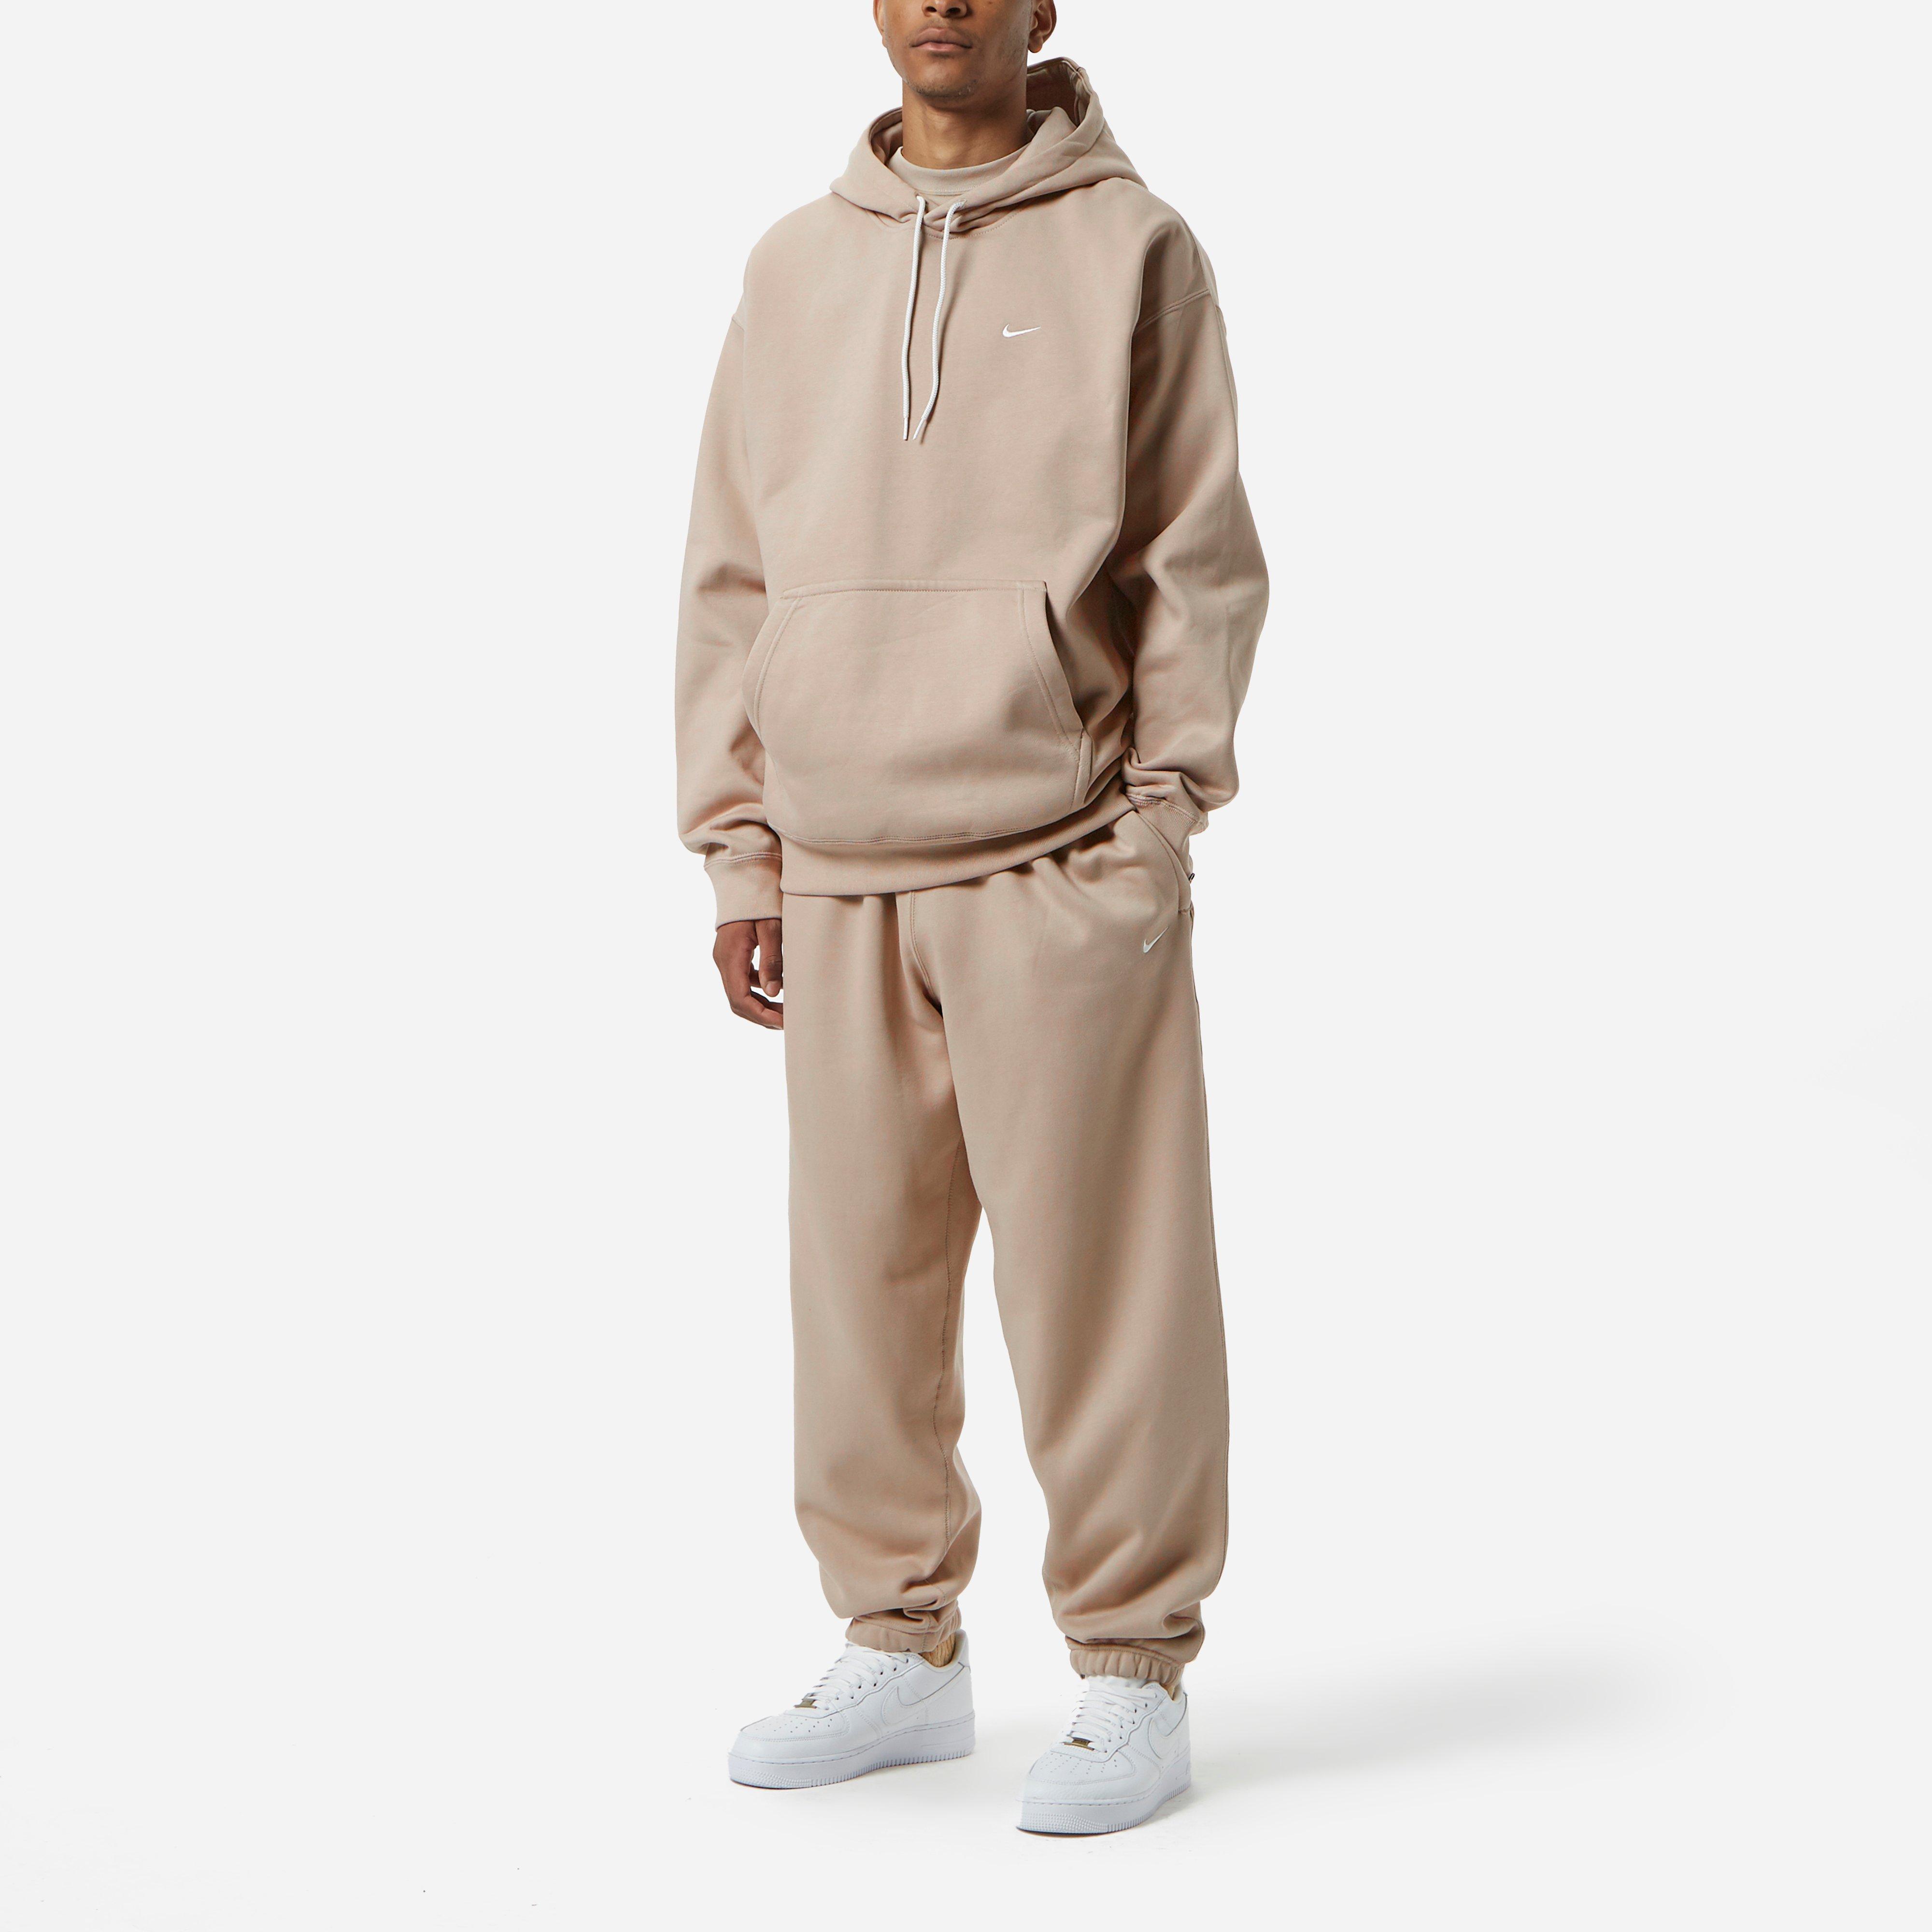 Nike Premium Essentials Fleece Hoodie in Brown for Men - Lyst